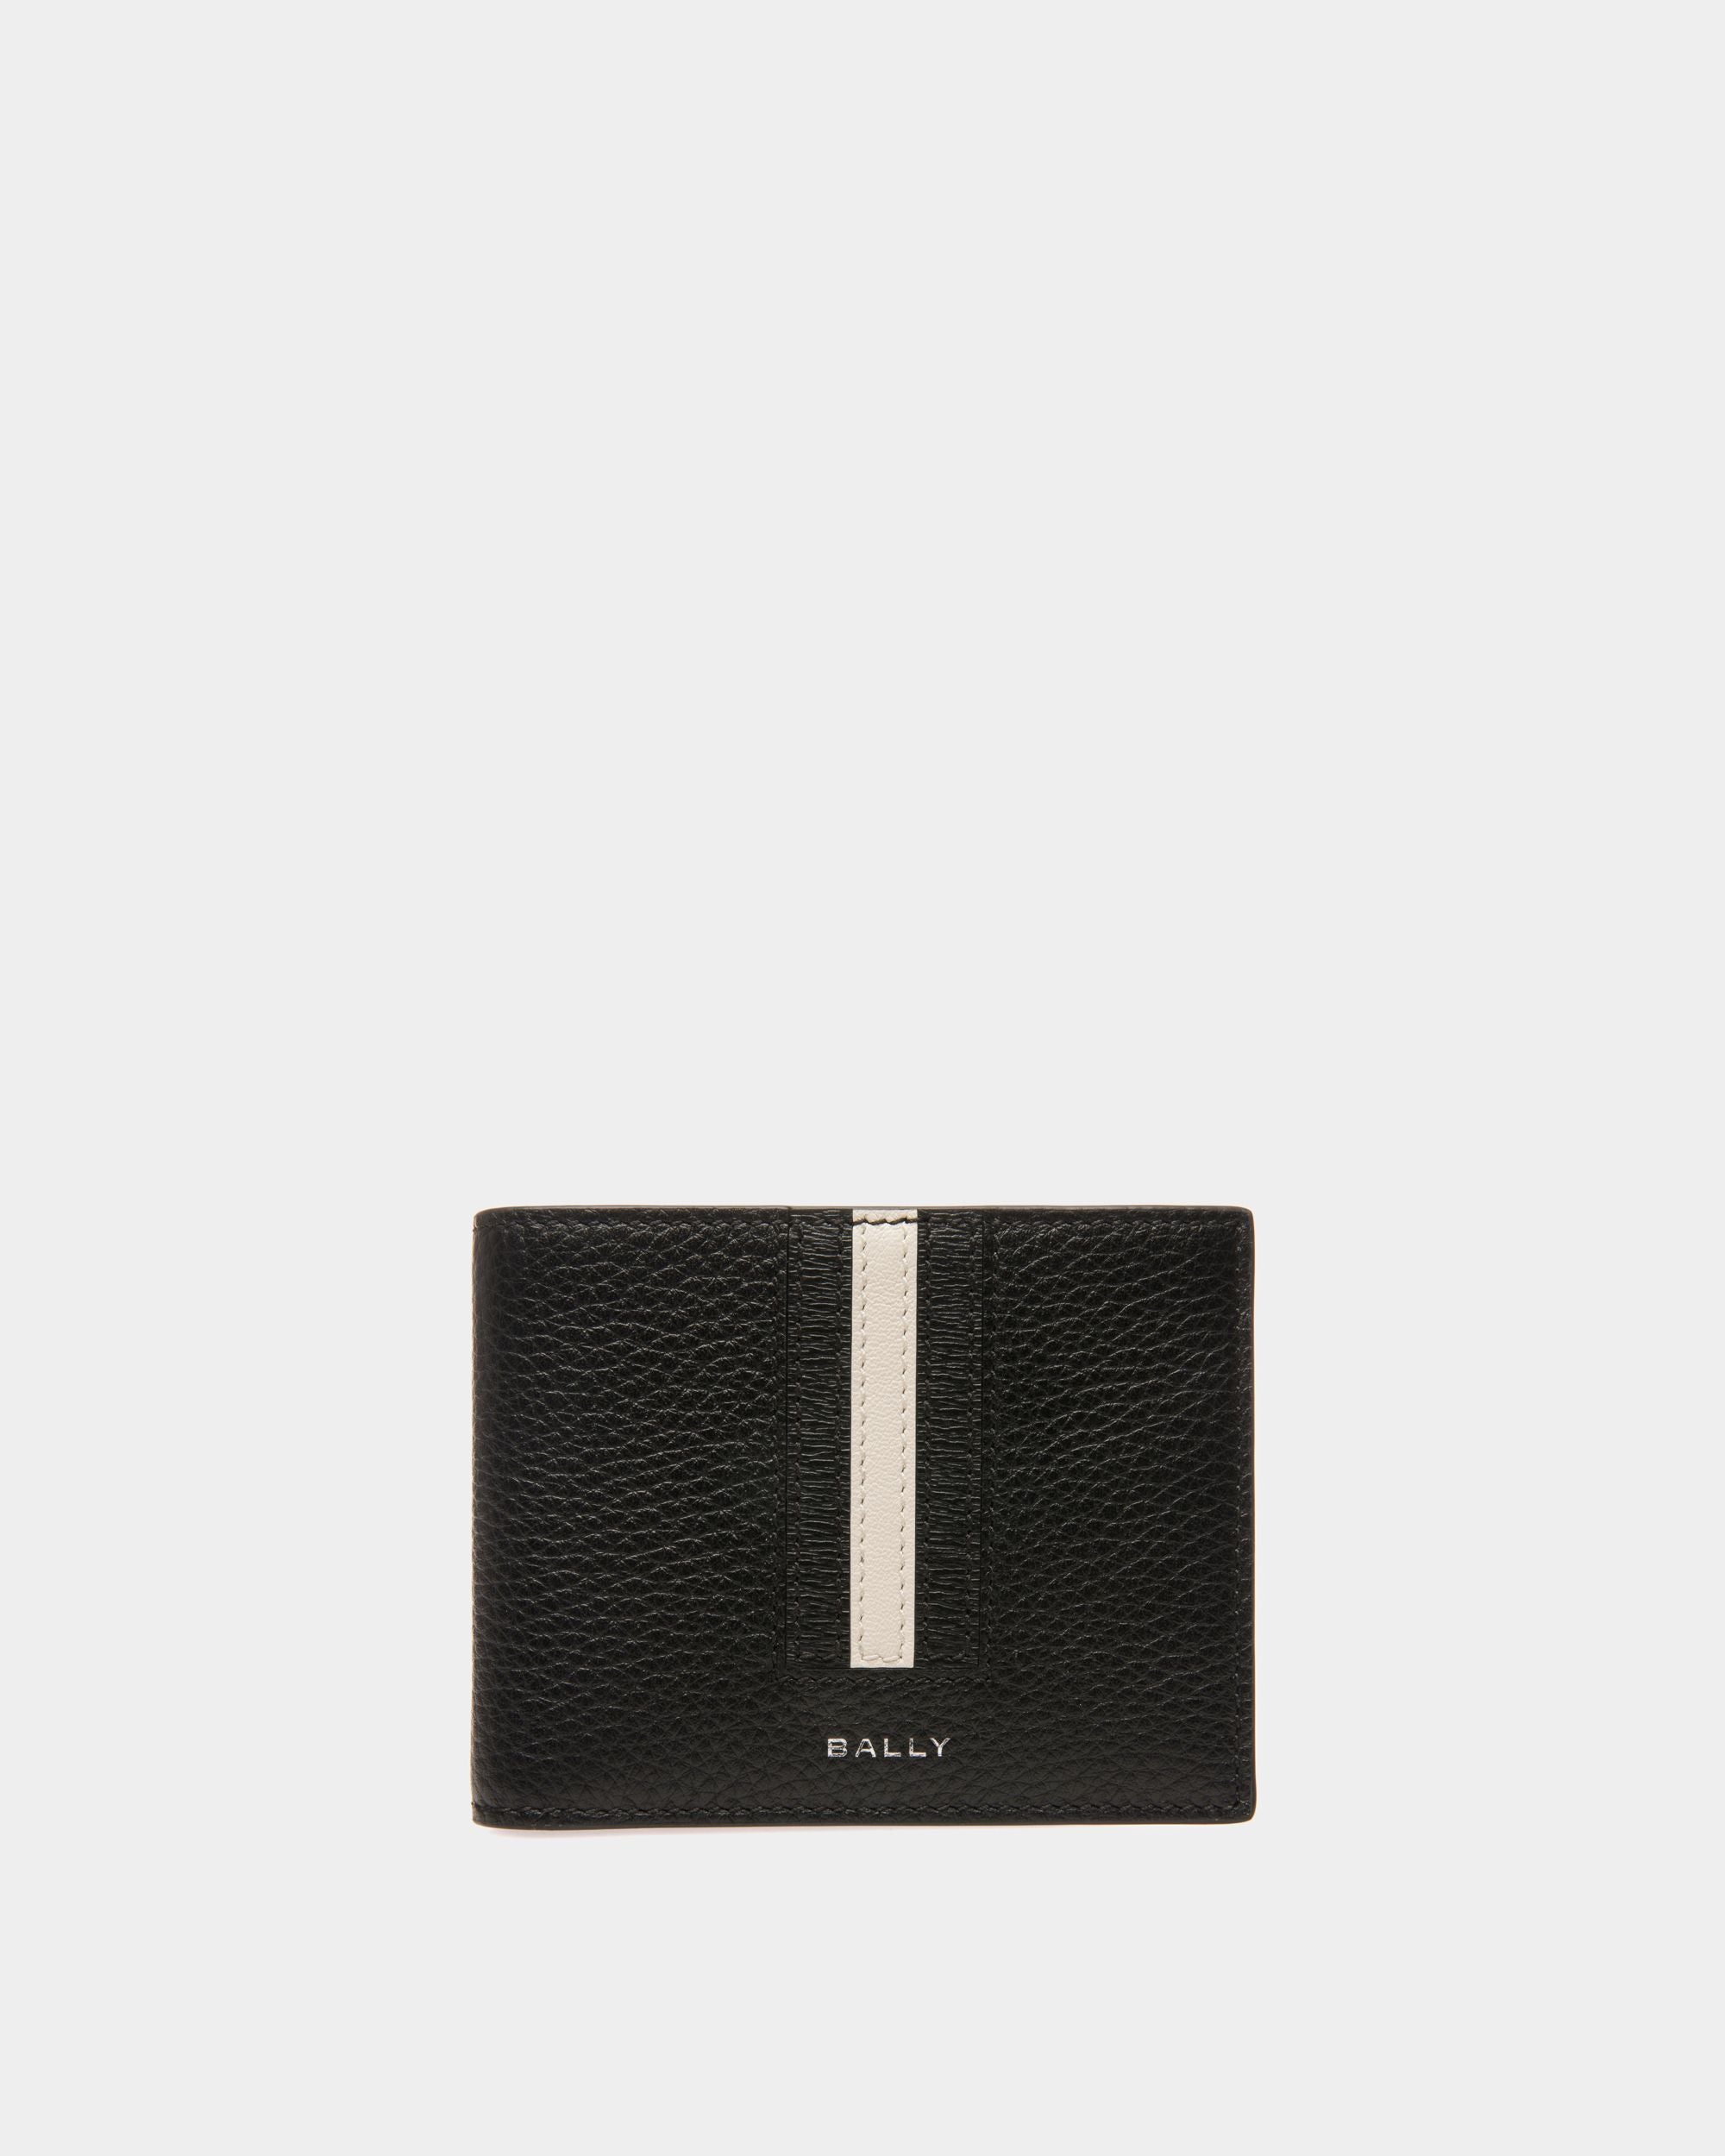 Ribbon Wallet | Men's Wallet | Black Leather | Bally | Still Life Front